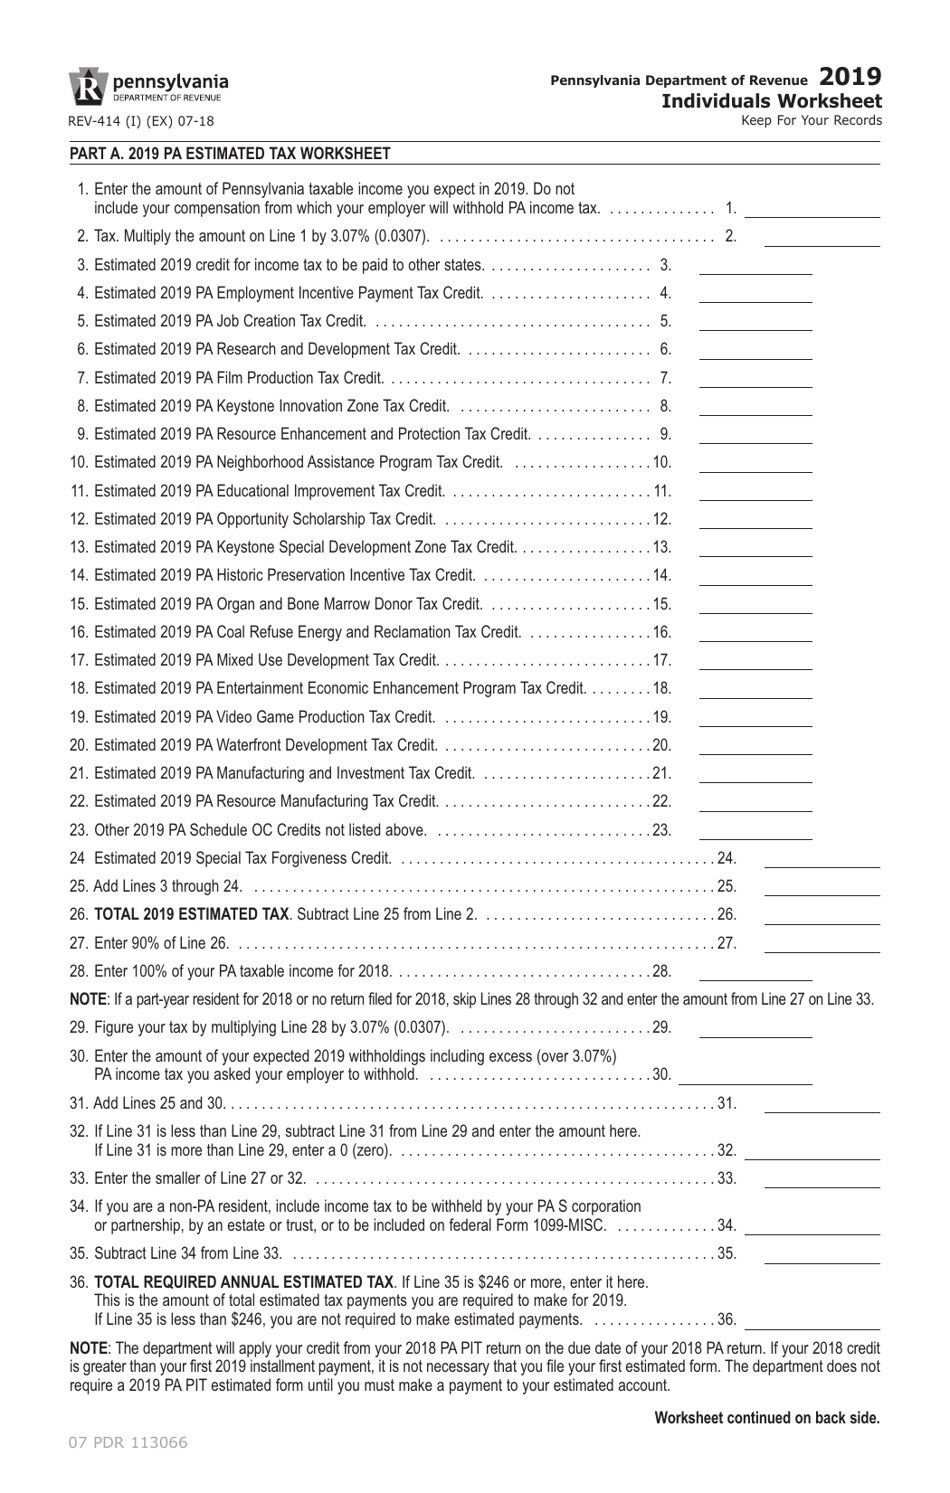 Form REV-414 (I) Individuals Worksheet - Pennsylvania, Page 1